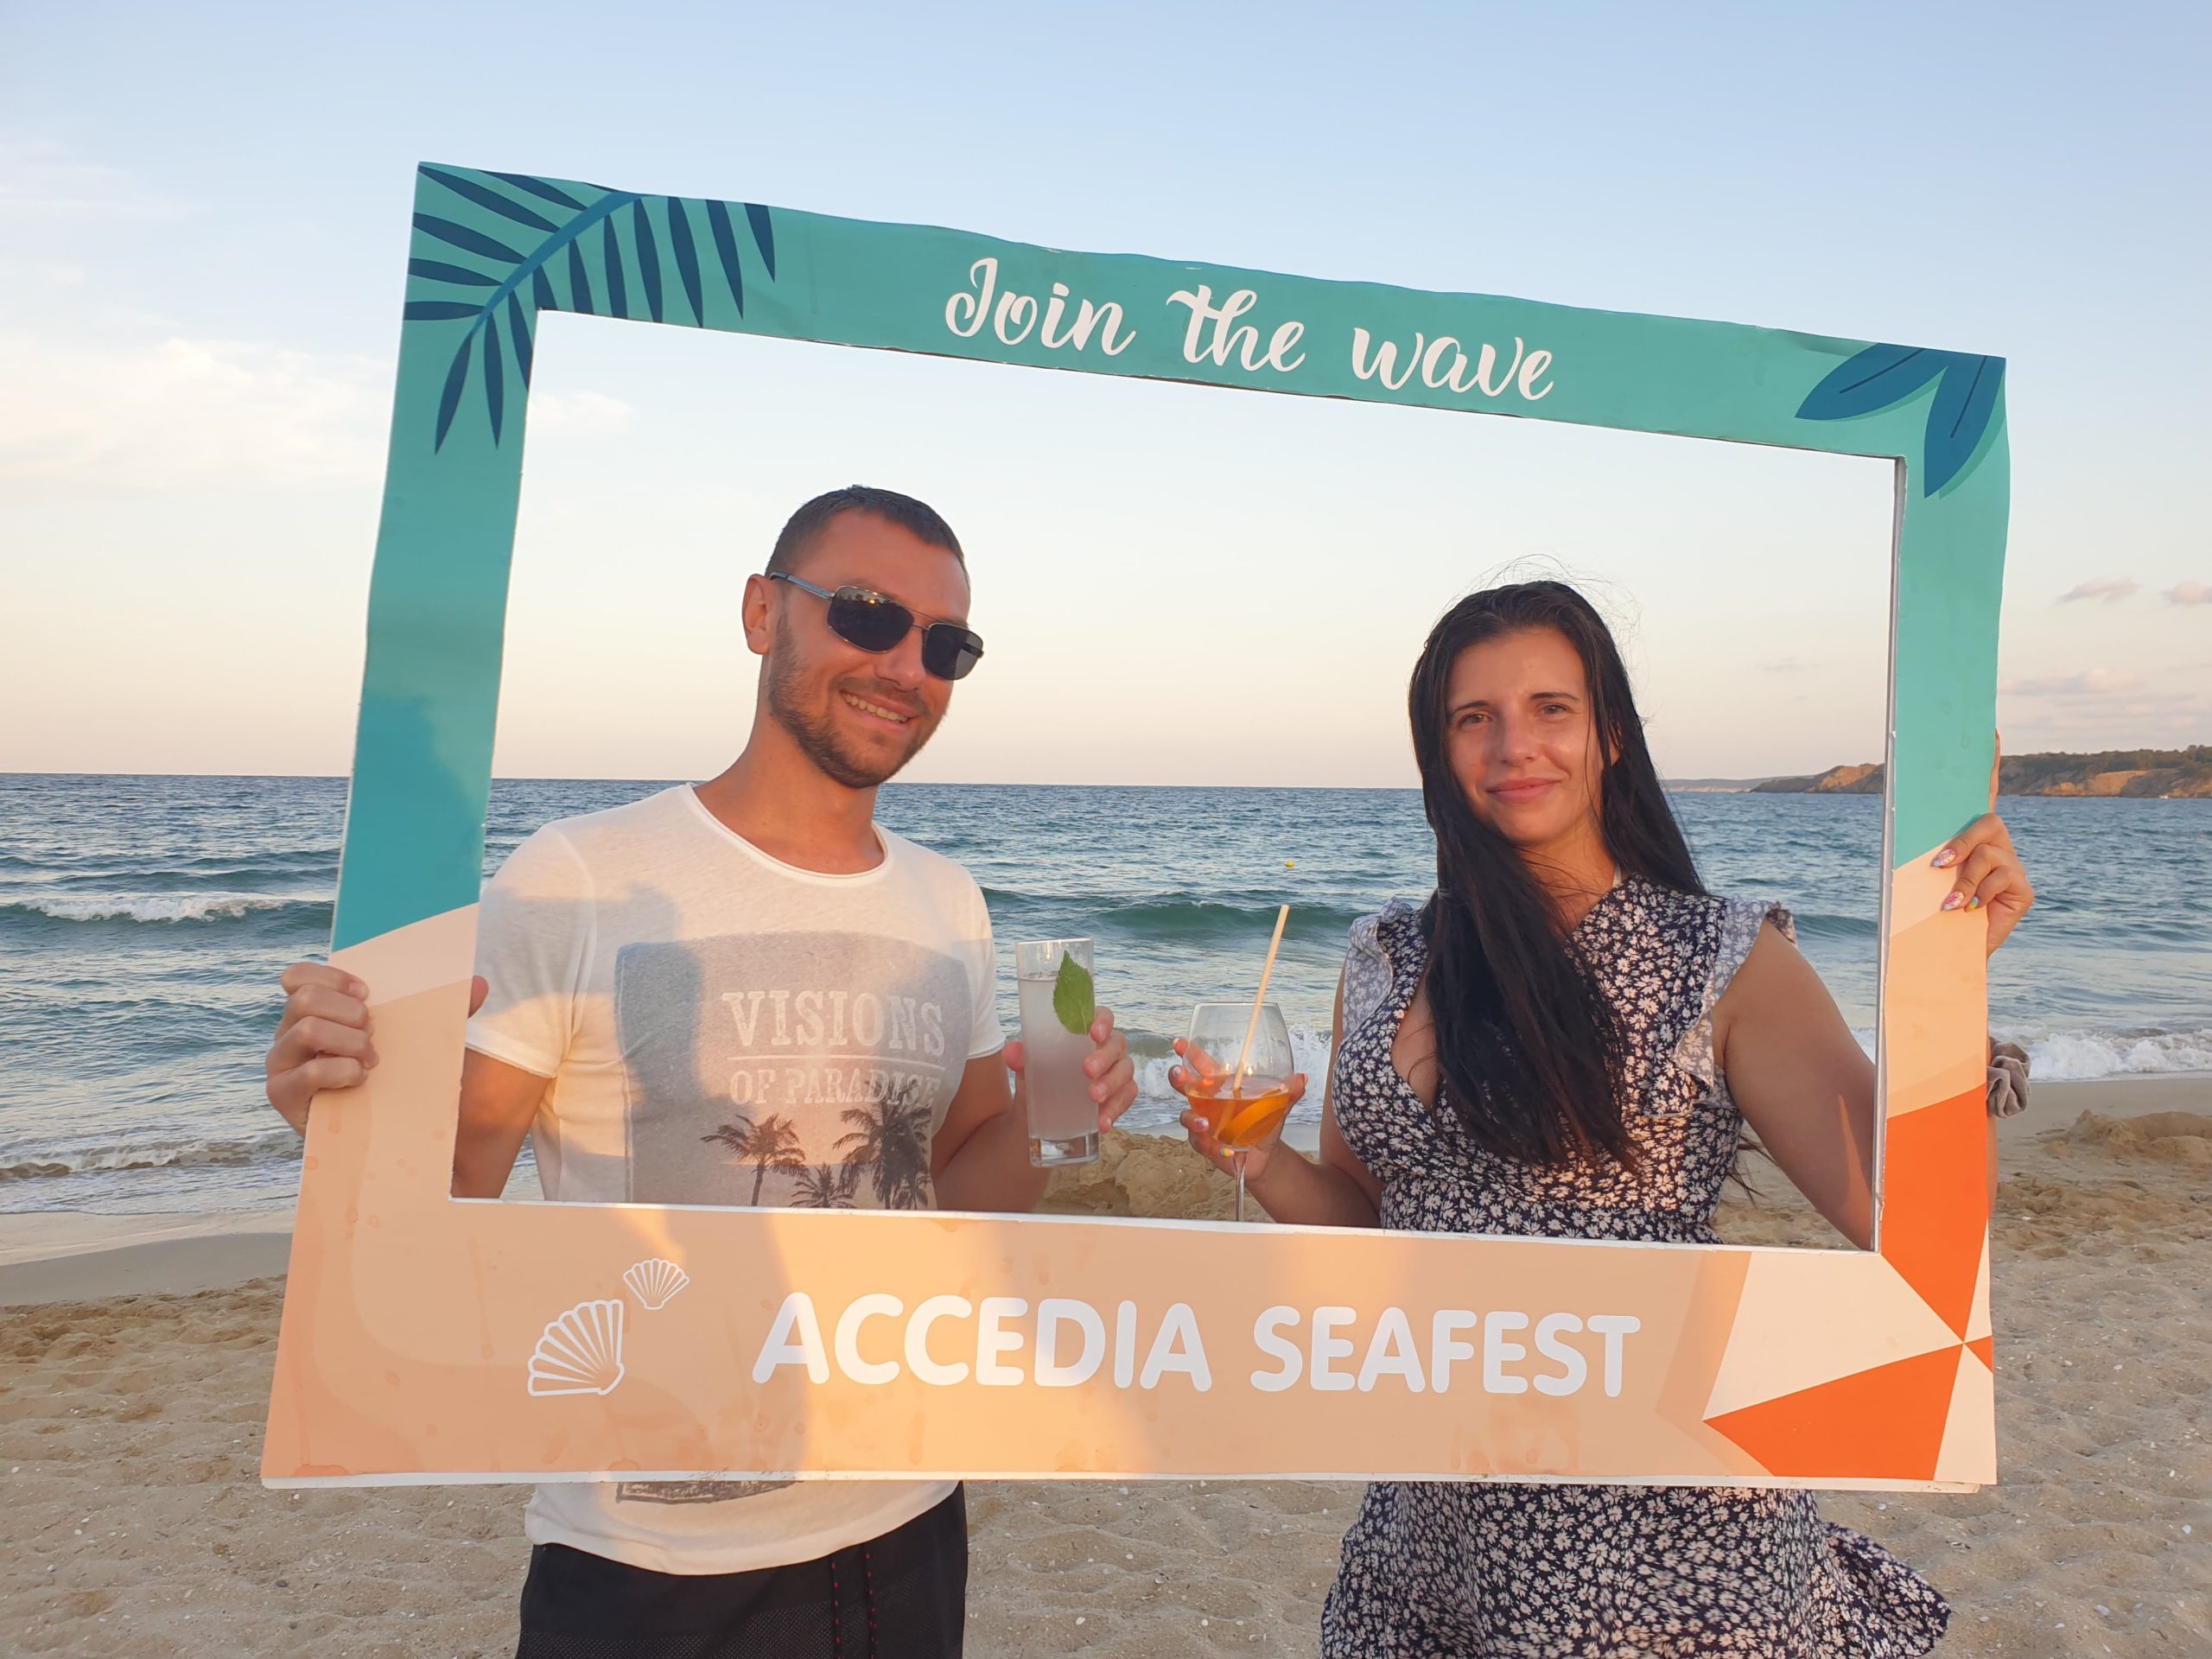 Accedia Sea Fest